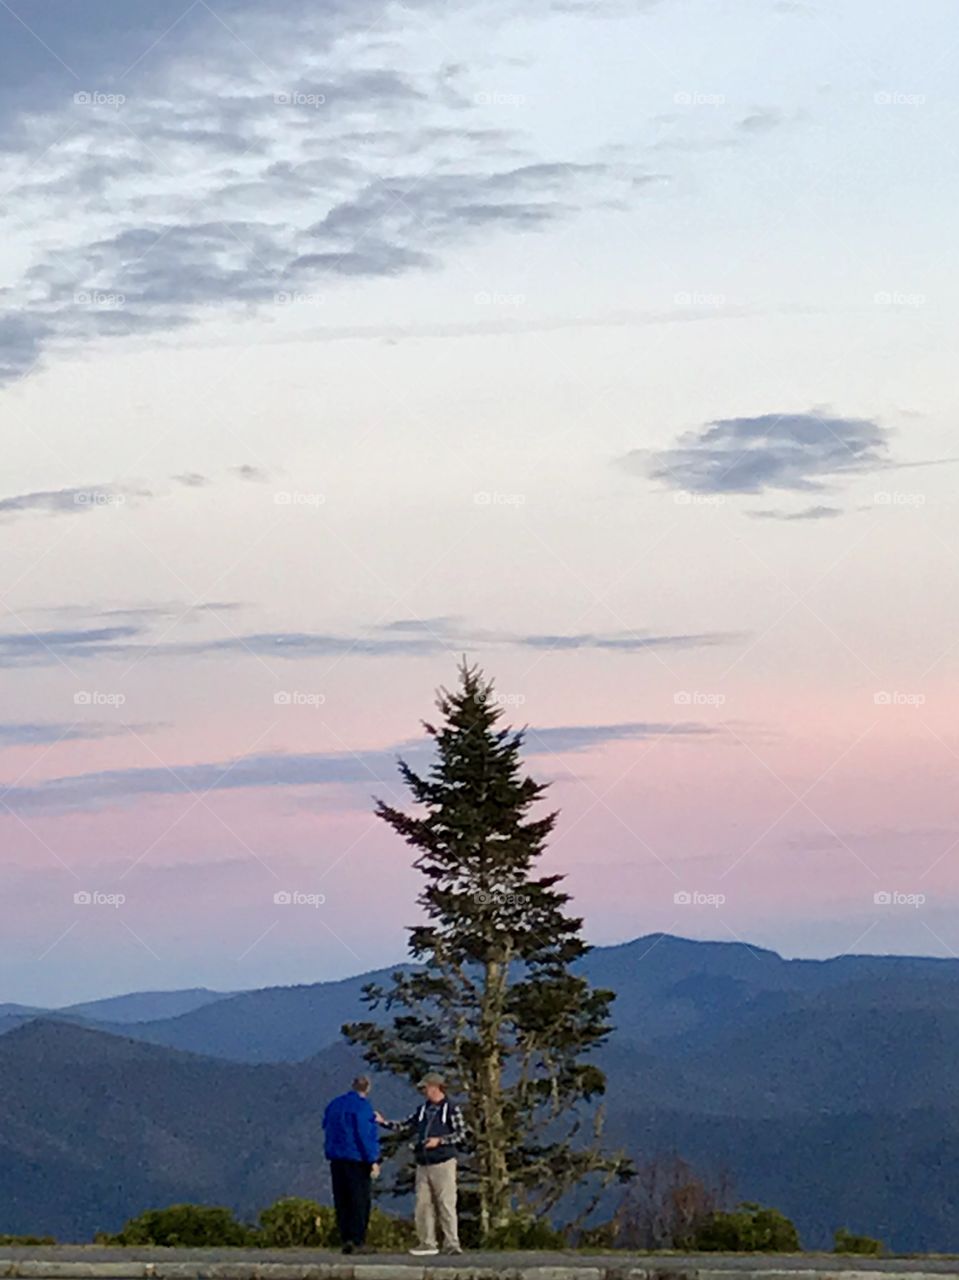 Two men, a tree and mountain range after mountain range - an awe inspiring sight.  